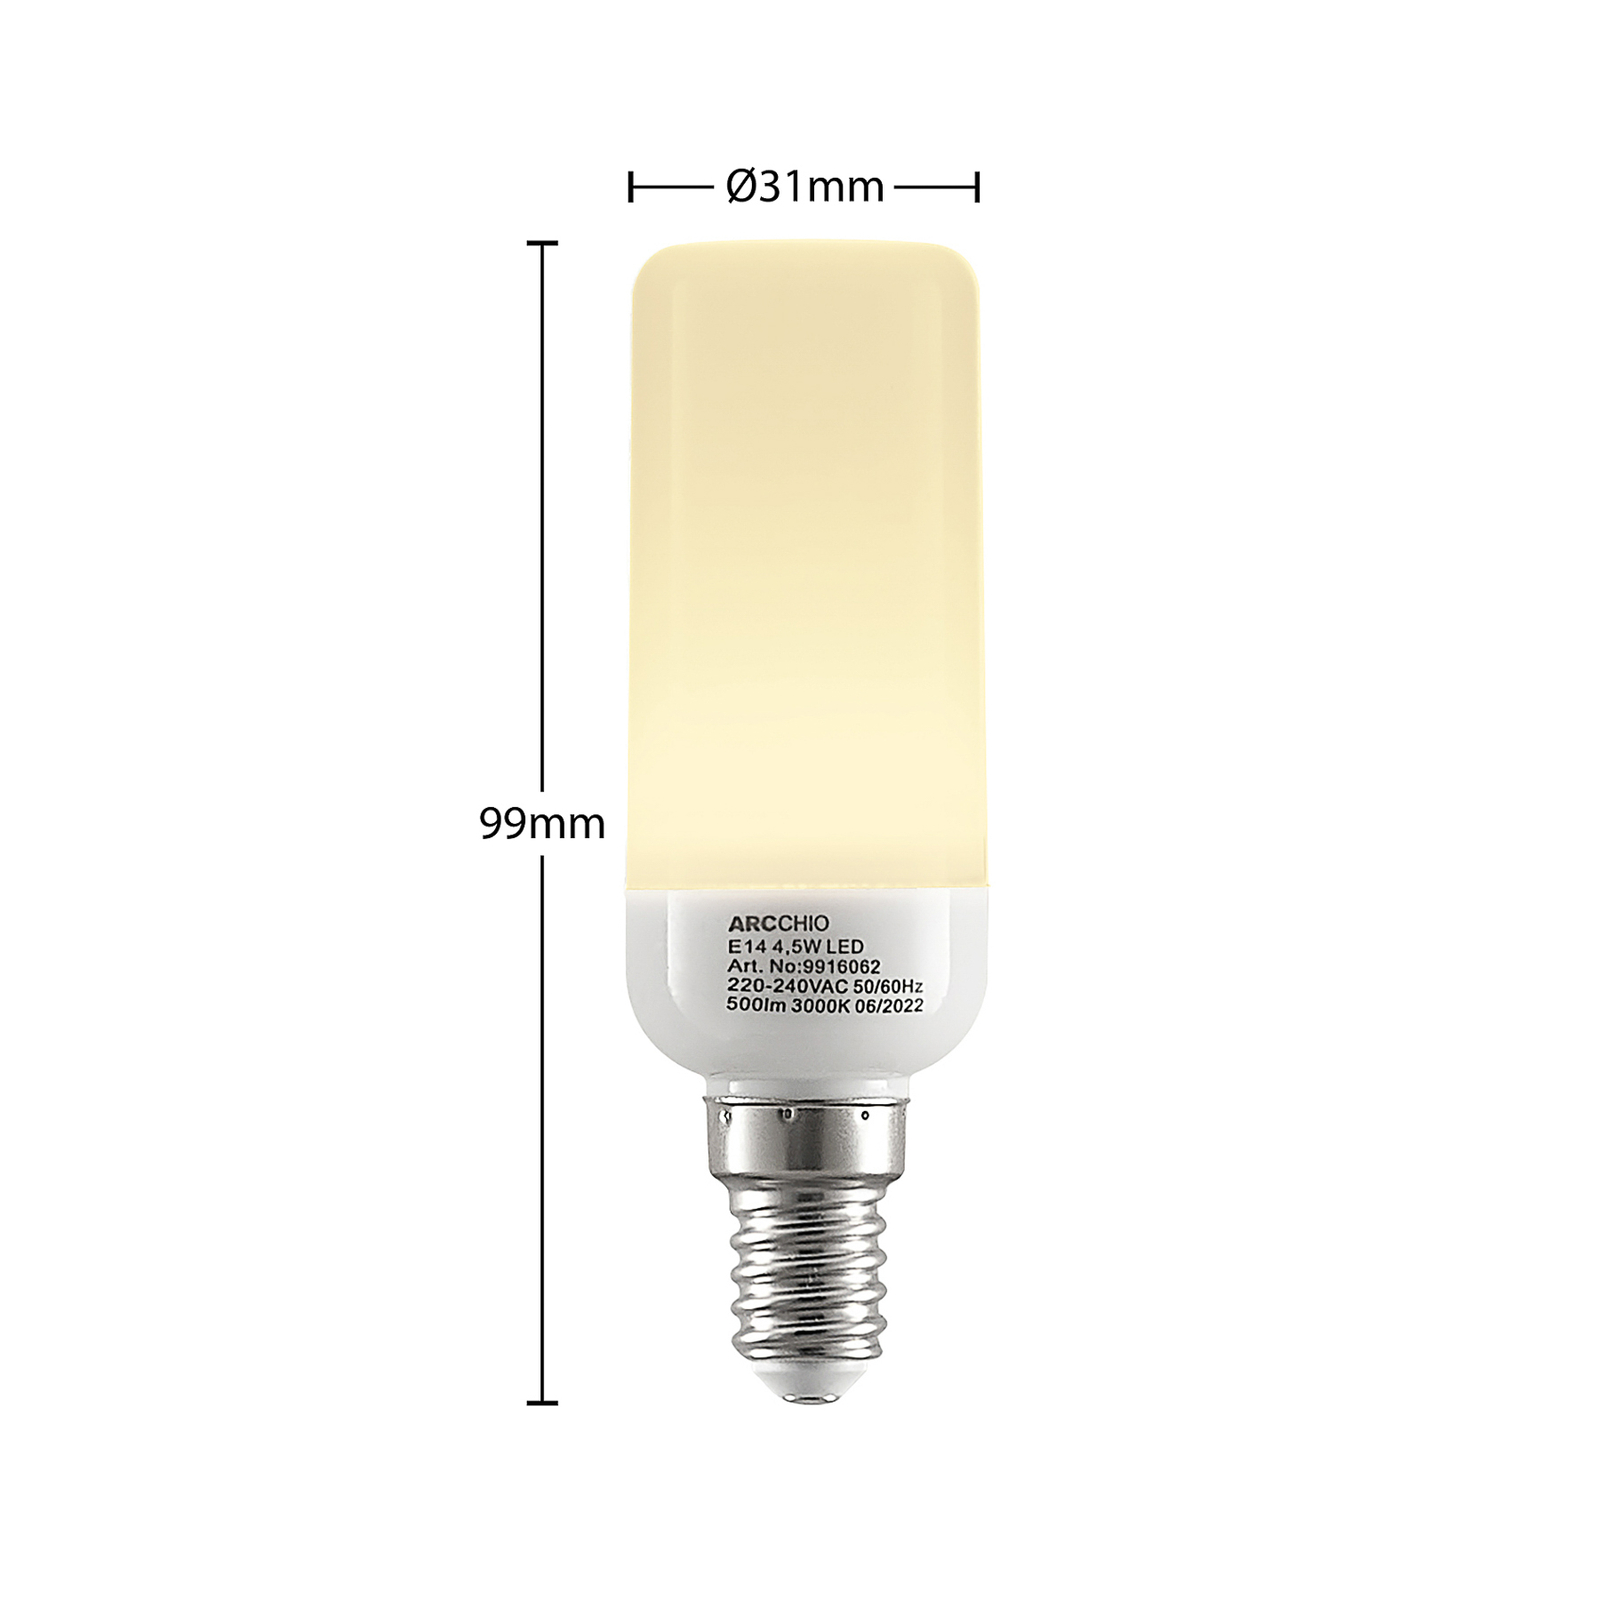 Arcchio LED lámpa cső alakban E14 4,5W 3,000K